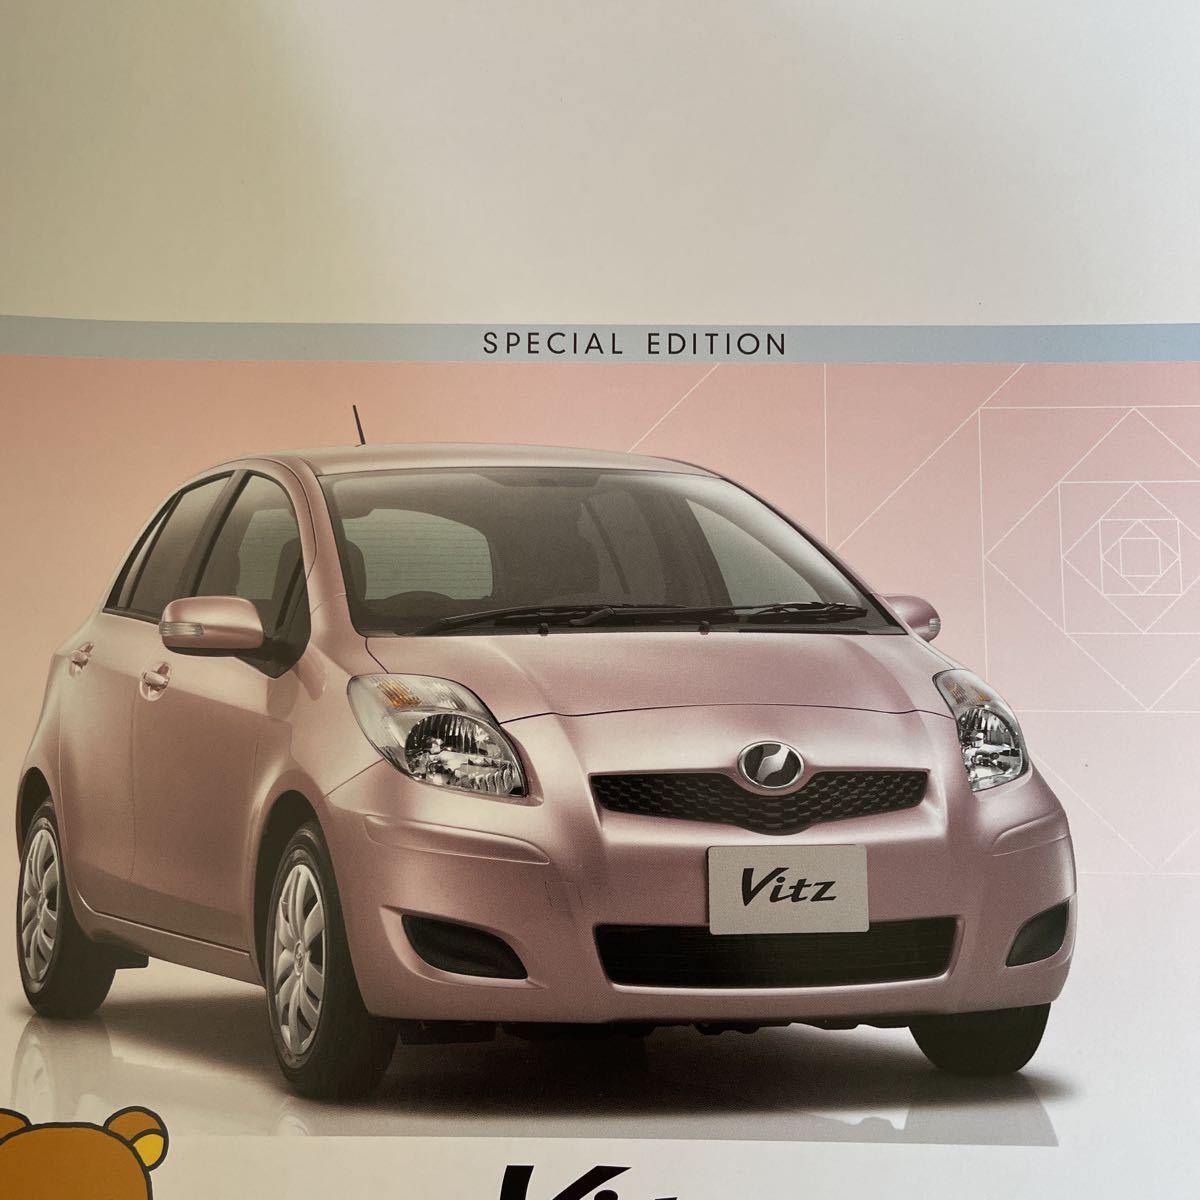 [ включая доставку ] Toyota Vitz каталог 2009 год 8 месяц выпуск 